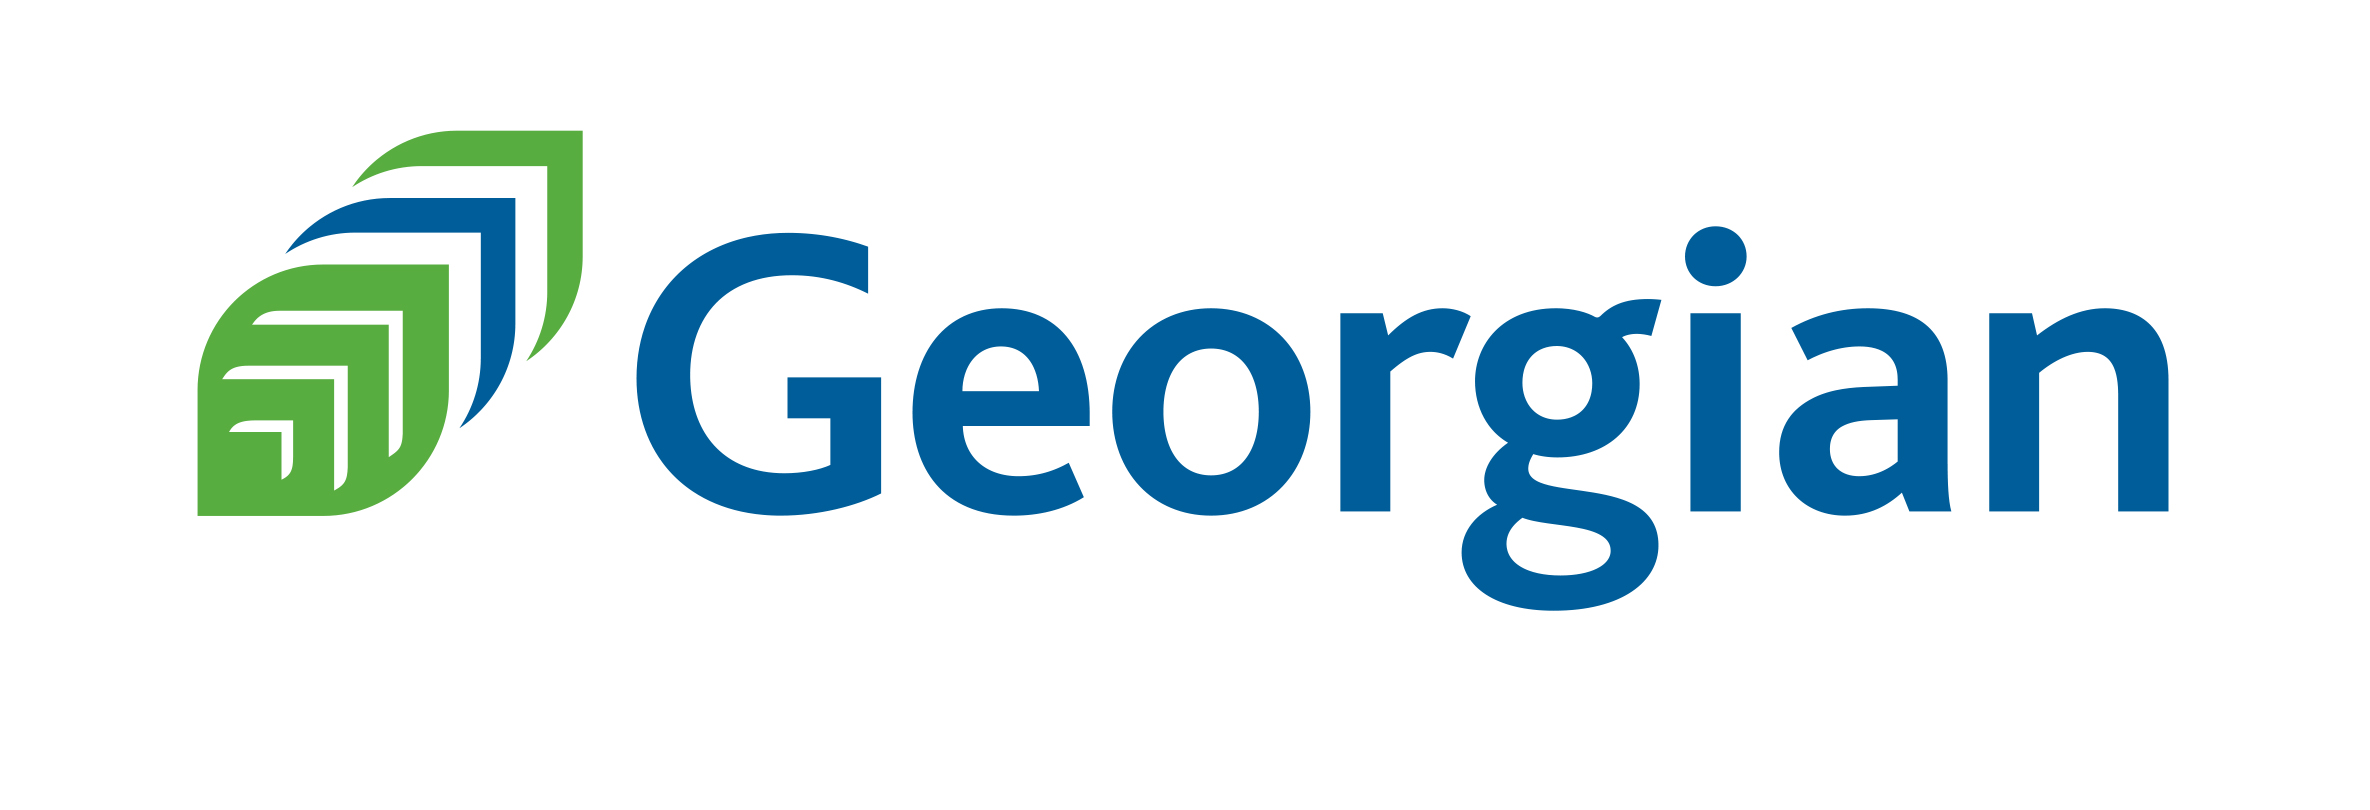   georgian_logo_colour_rgb_webonly.jpg